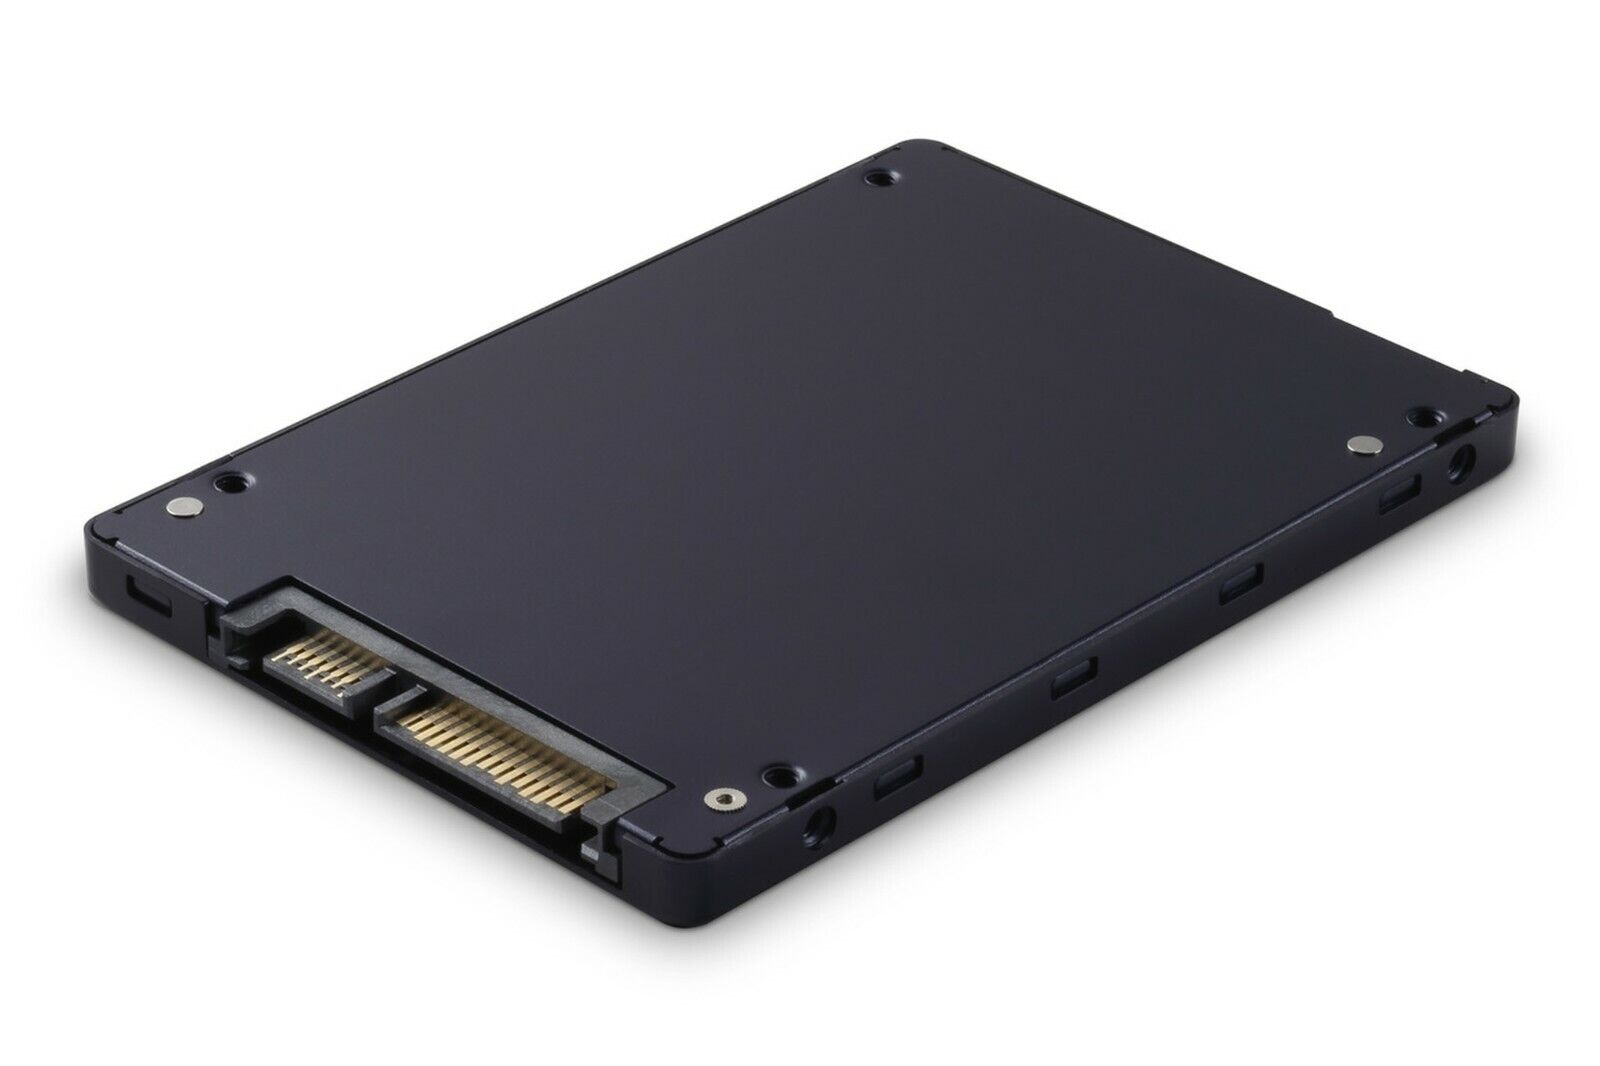 Asus G74S G74SX G73J G73JH - SSD Solid State Drive W/ Windows 10 Pro 64-Bit